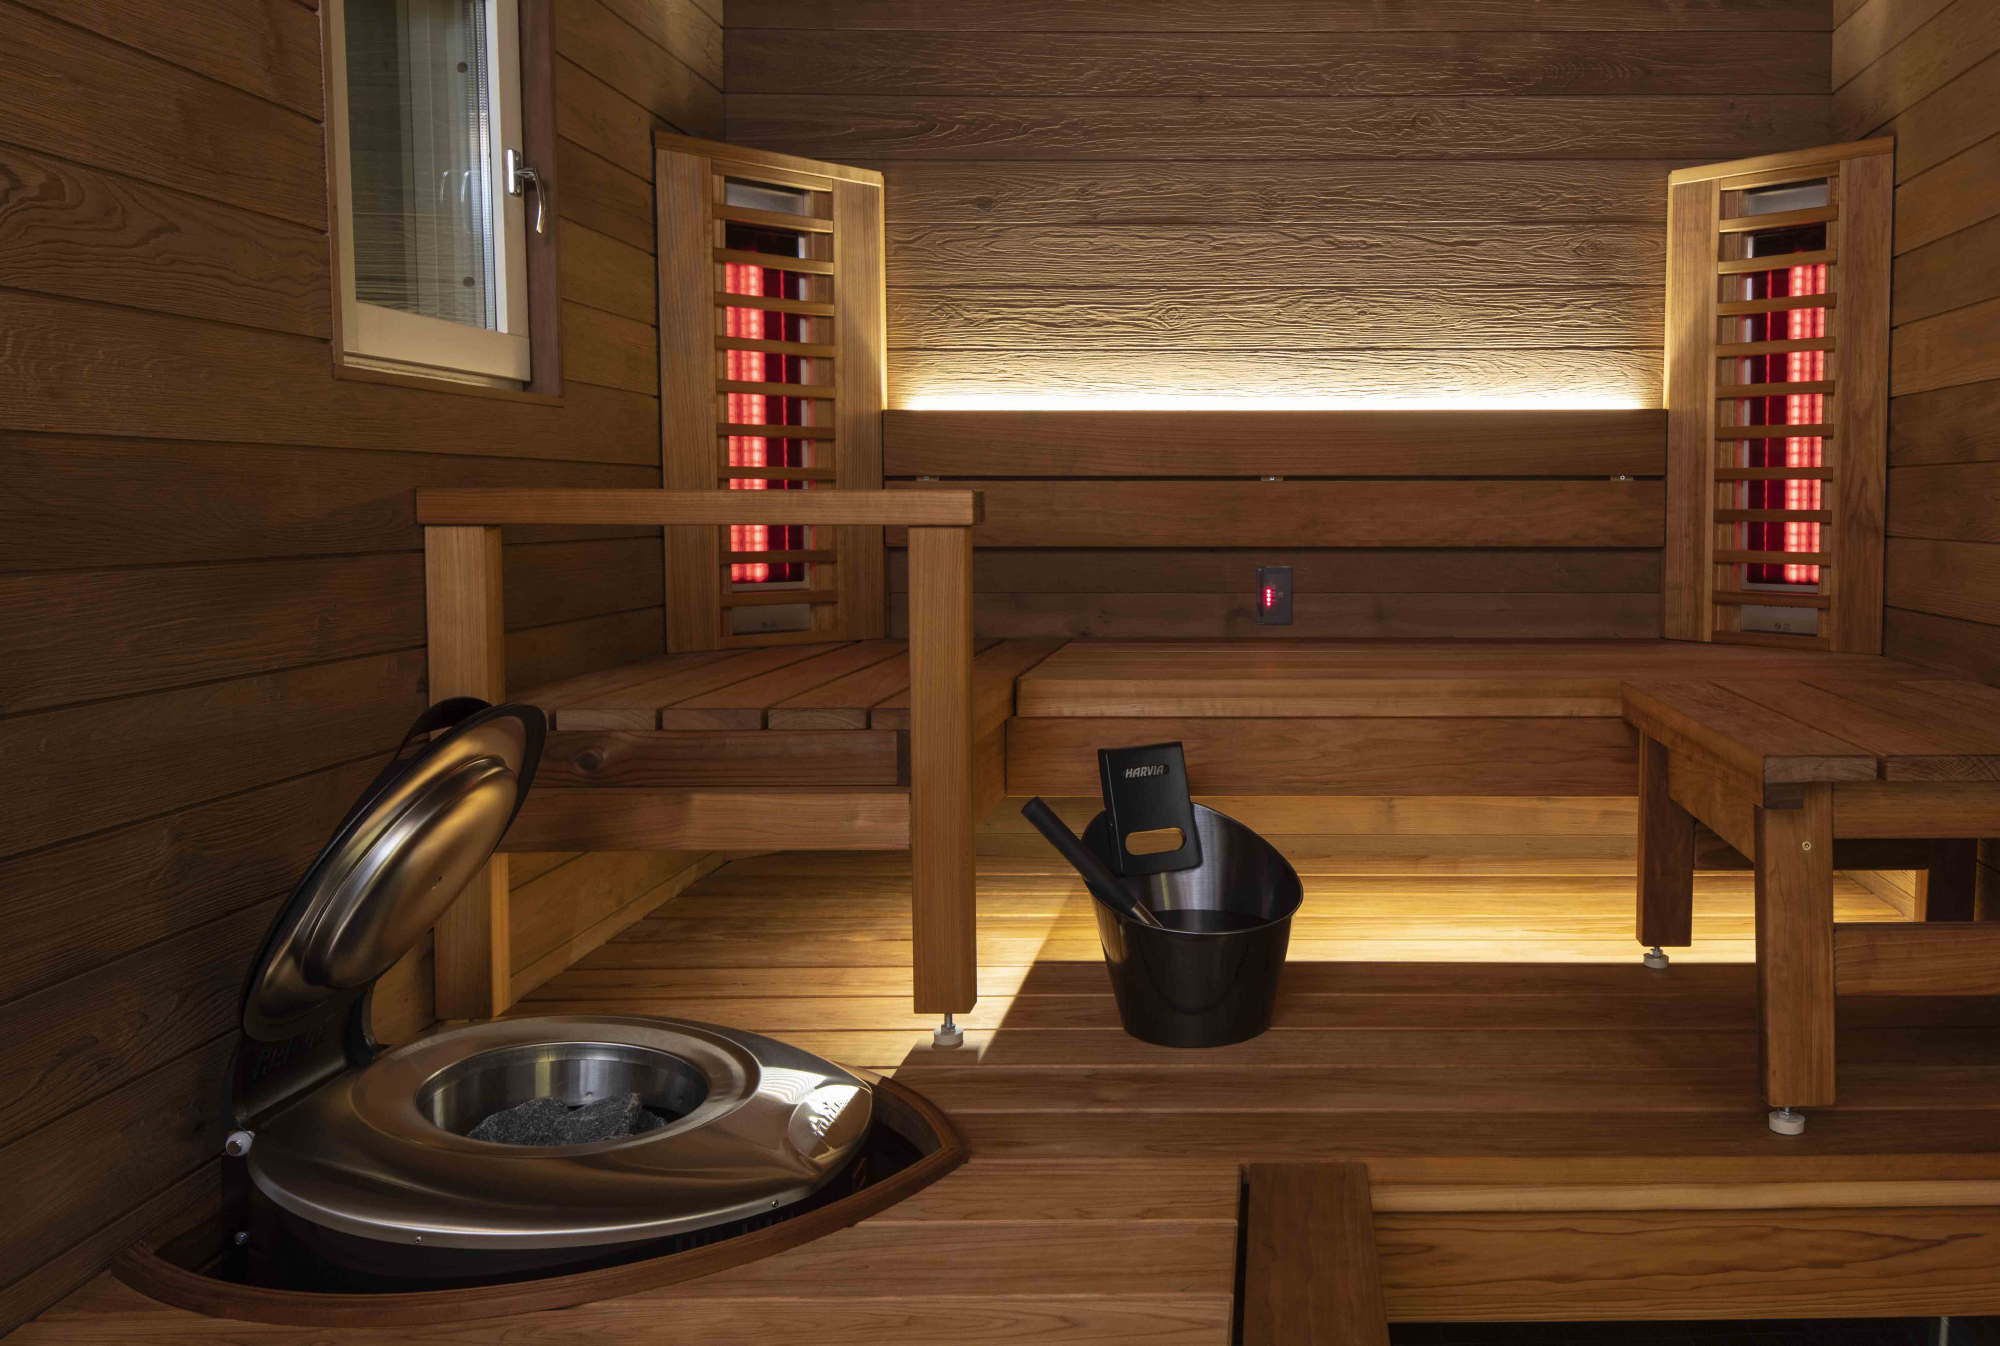 Harvia Forte Electric Sauna Heater 4.4/6.5/9.8kW